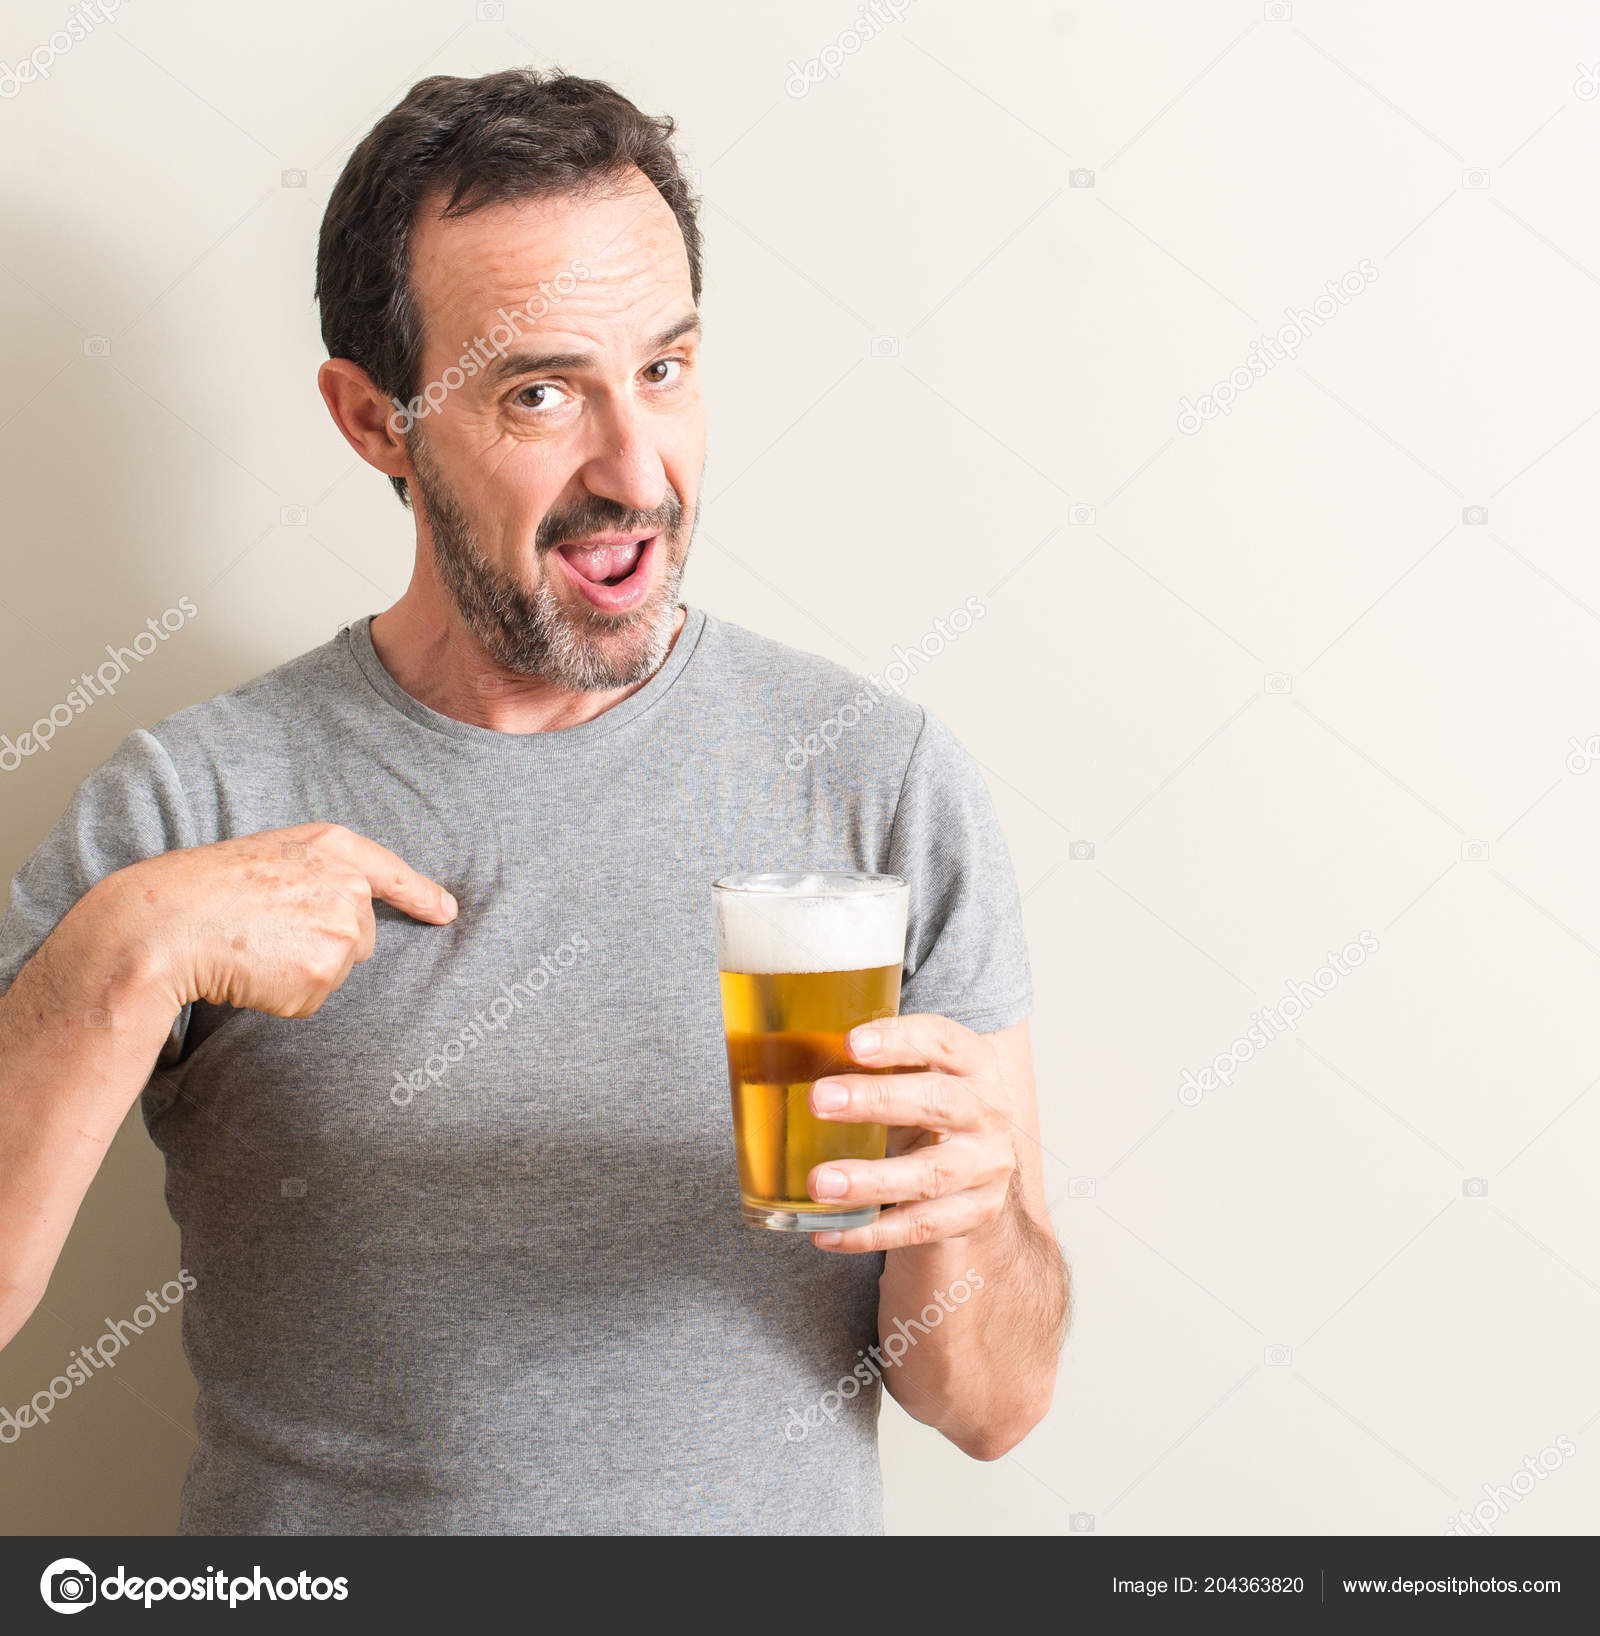 rekenkundig Uitgebreid fluiten Senior Man Drinking Beer Surprise Face Pointing Finger Himself Stock Photo  by ©Krakenimages.com 204363820